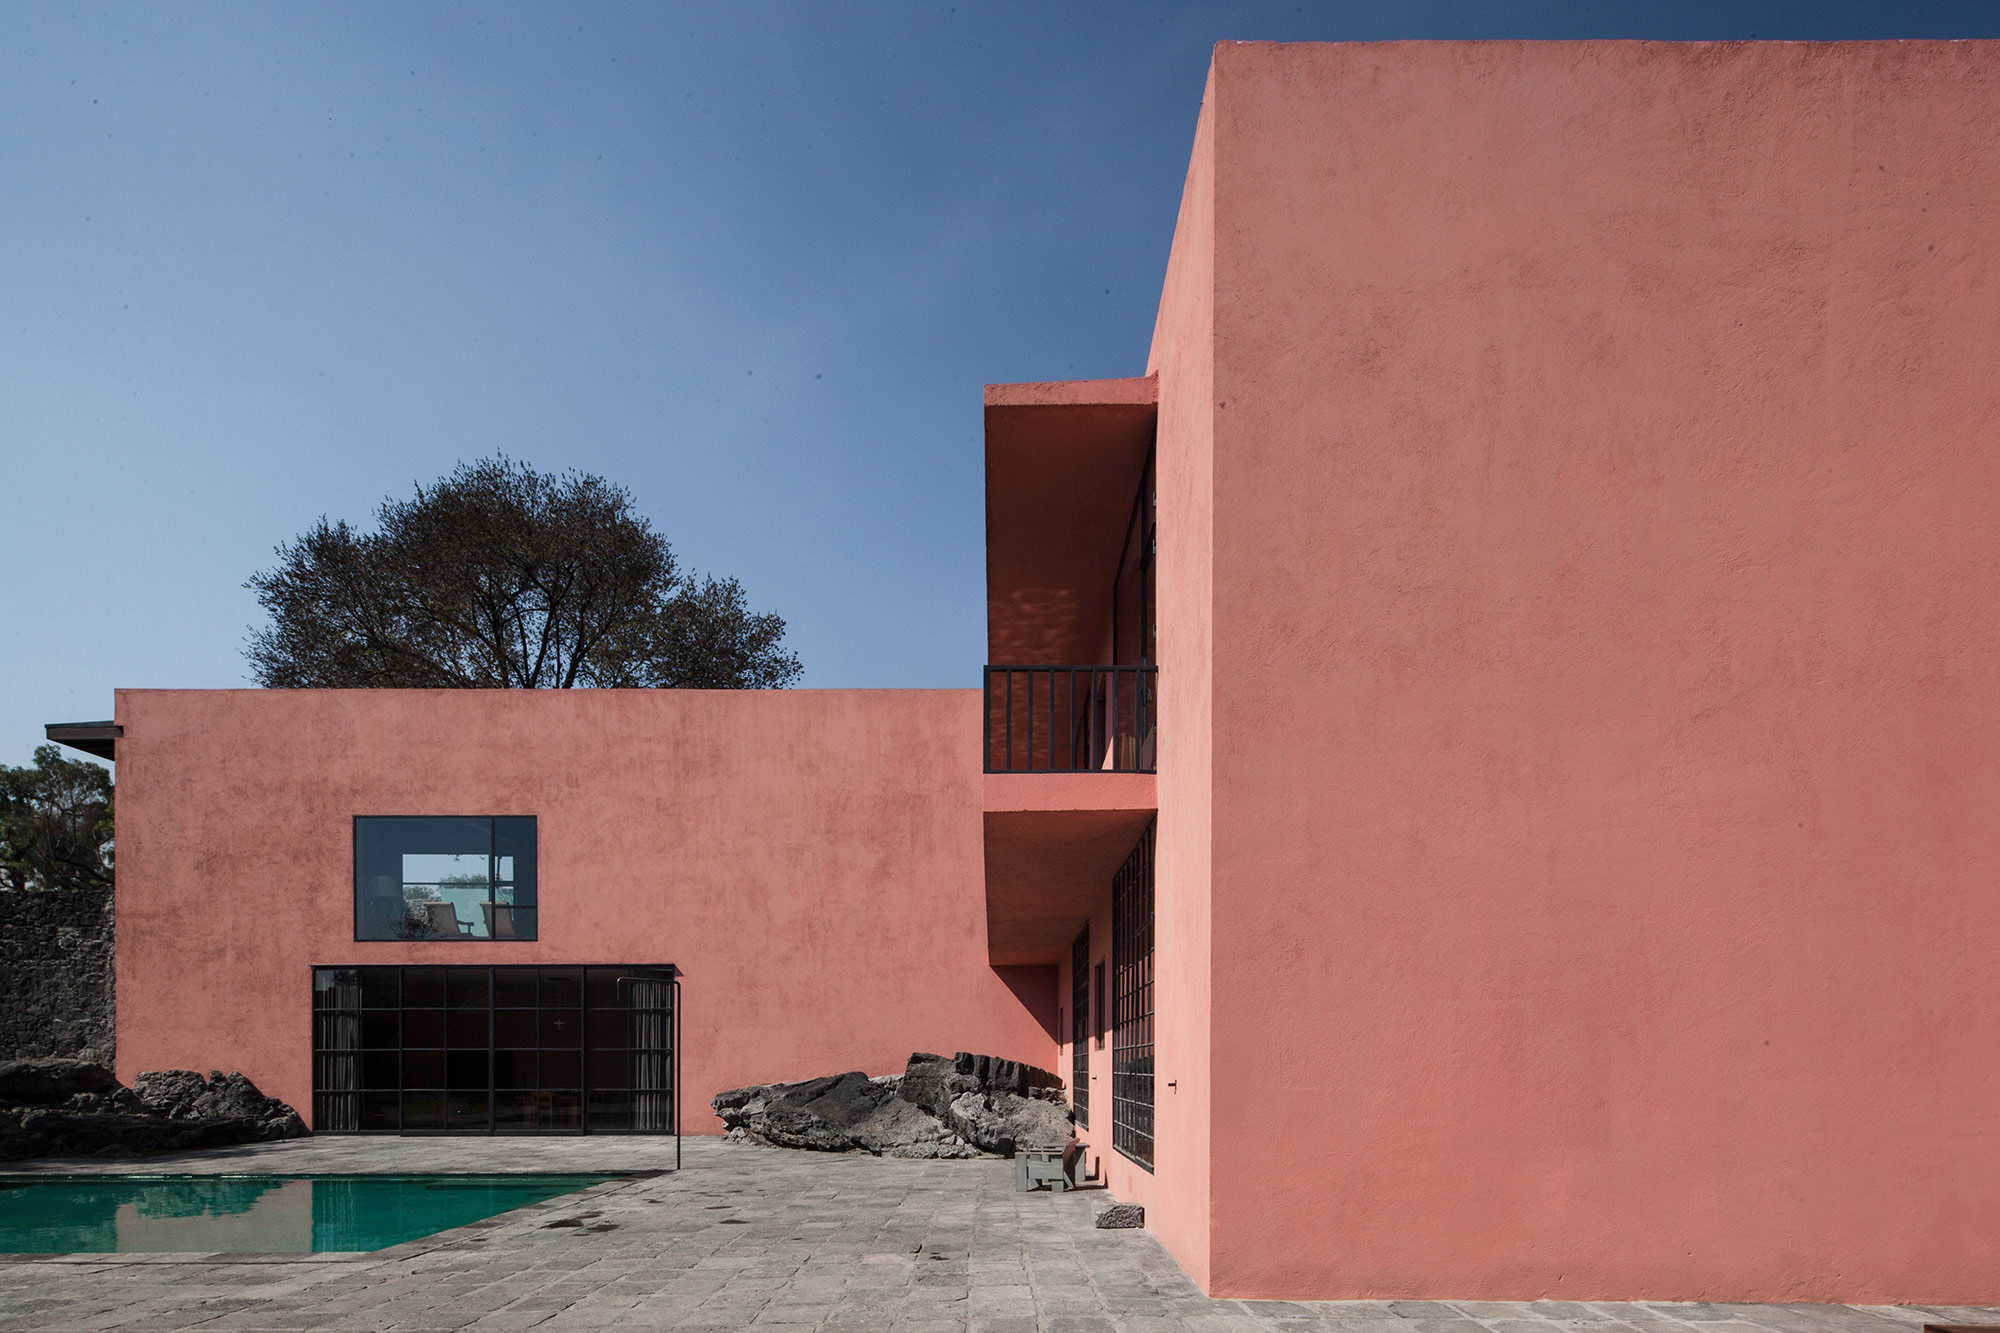 Casa Pedregal by Luis Barragan: Embracing Nature & Modernism